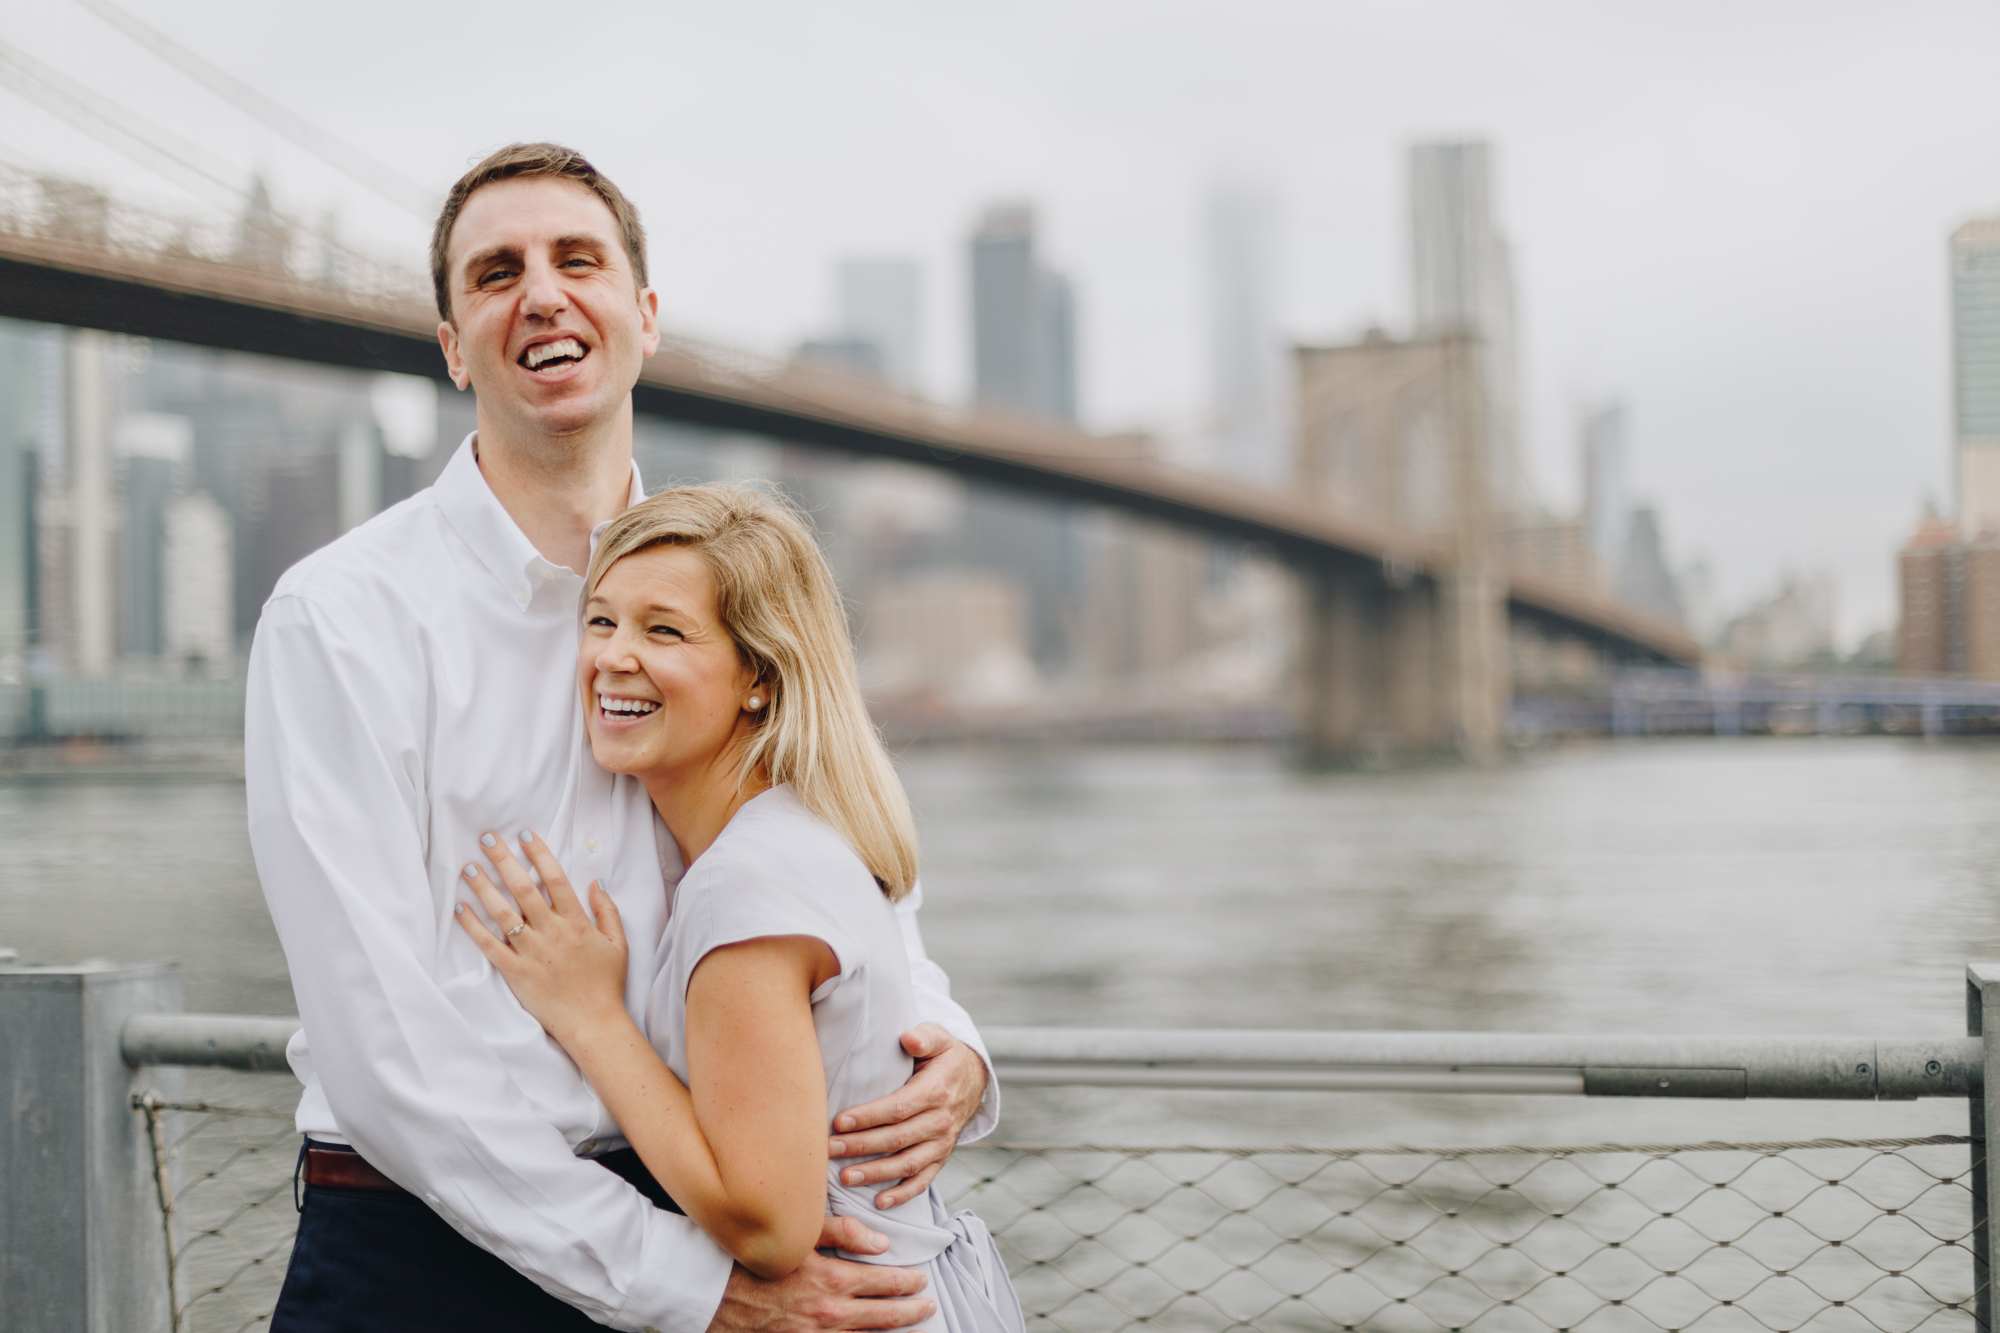 Joyful Brooklyn Bridge Park Engagement Photos on a Cloudy Day in New York